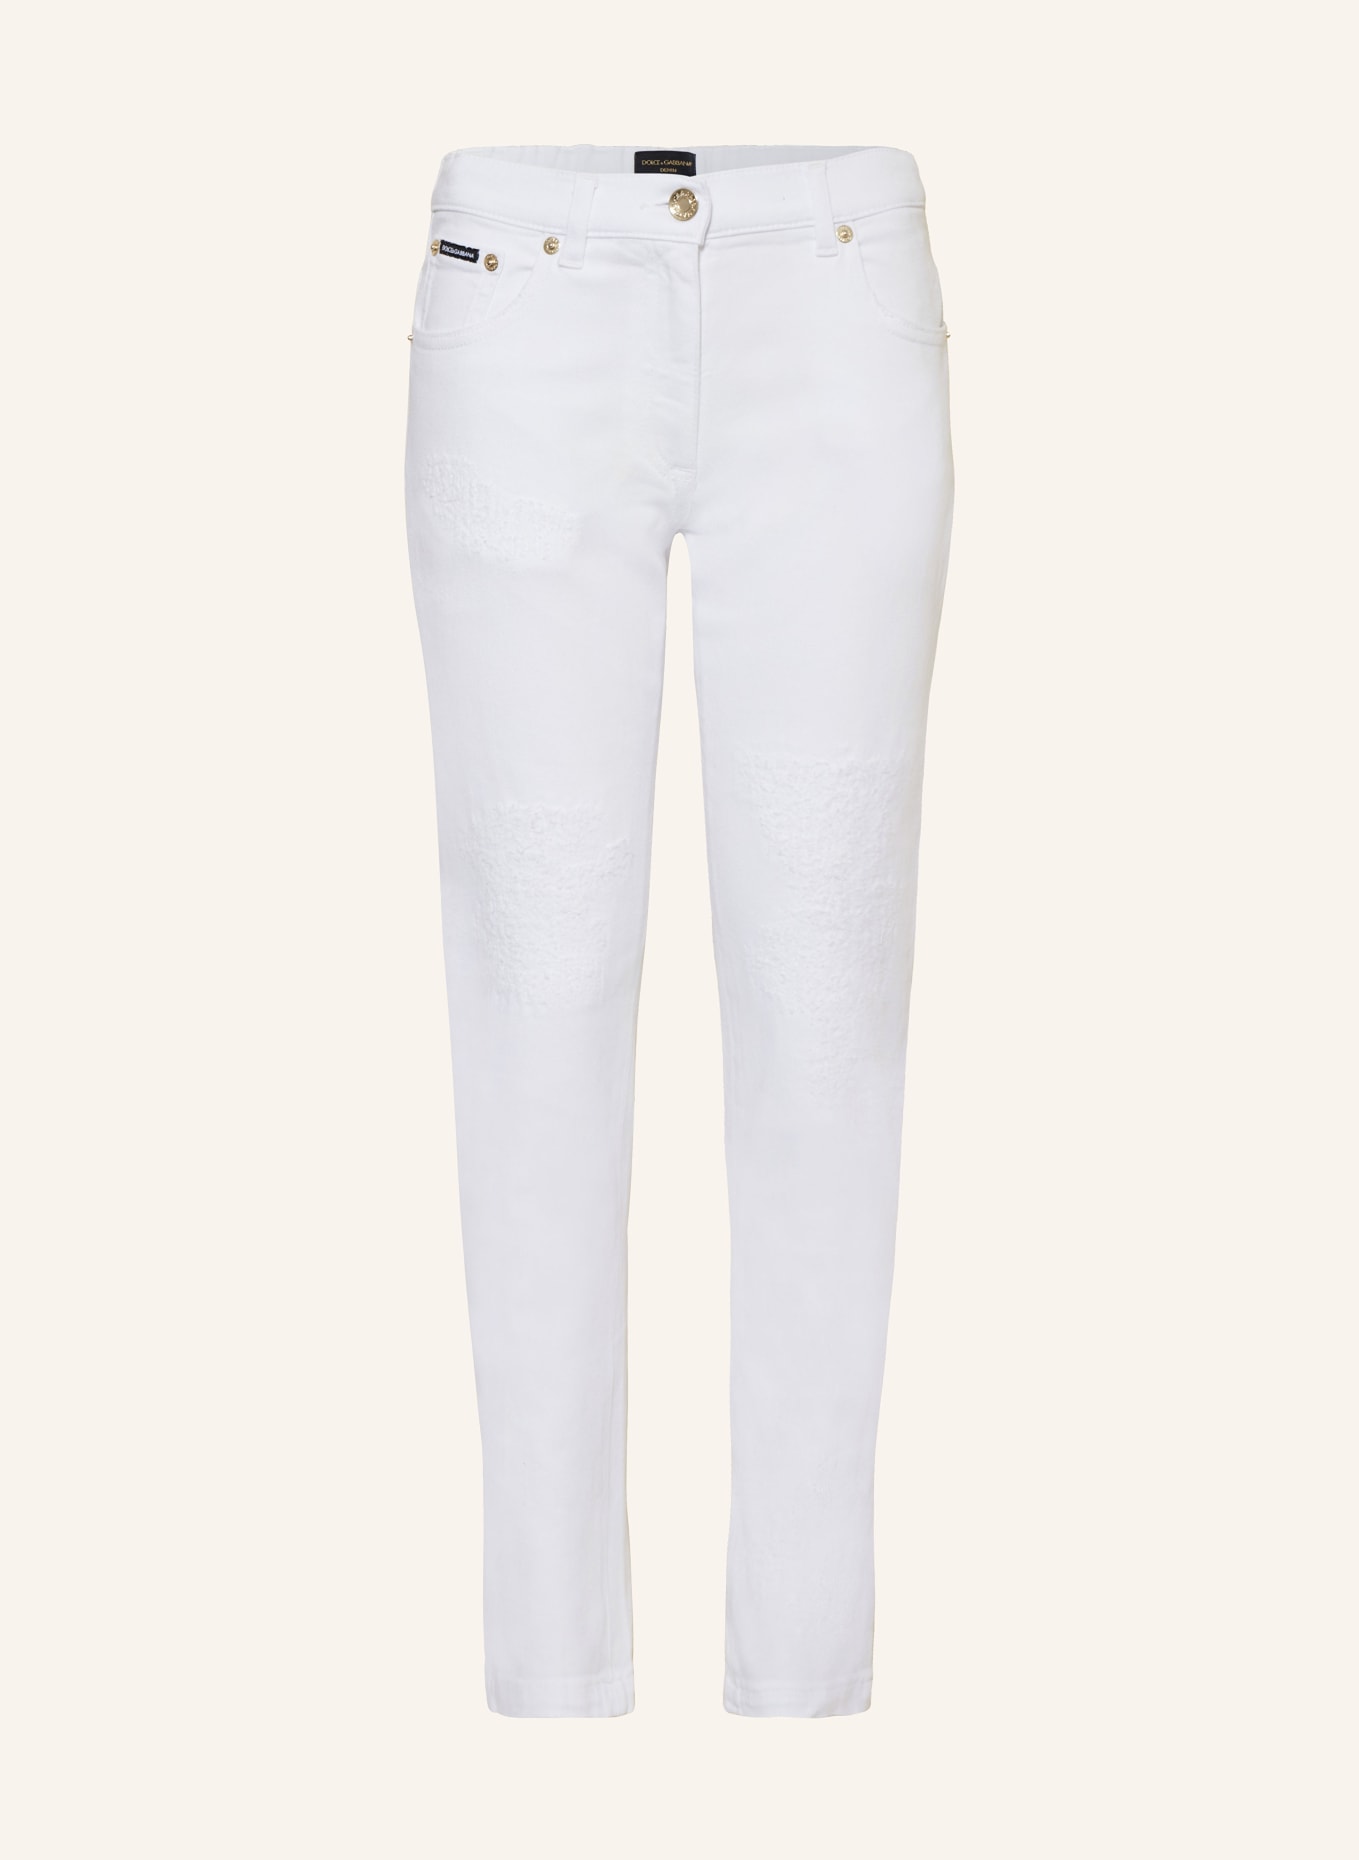 DOLCE & GABBANA Jeans, Farbe: S9000 VARIANTE ABBINATA (Bild 1)